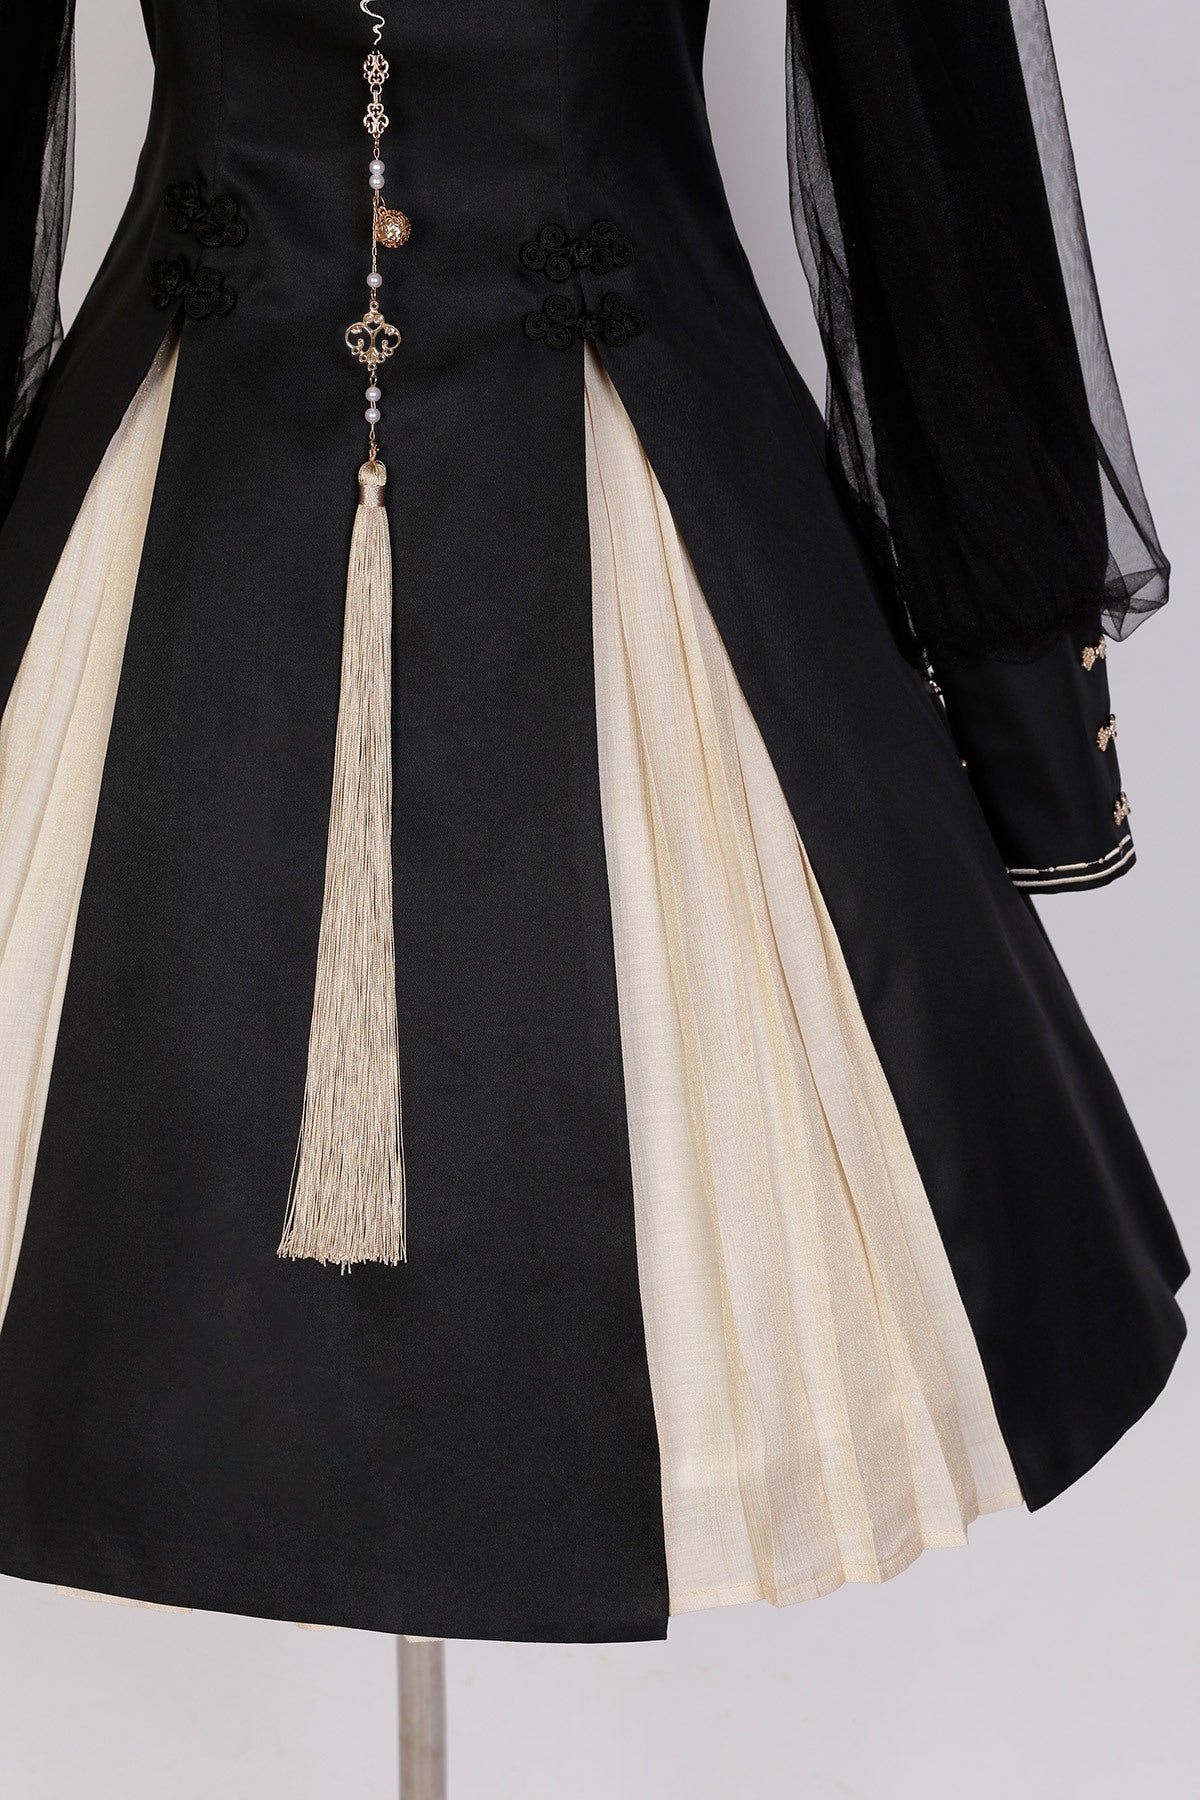 (Buyforme)Jinmu~Elegant Fusion of Gothic and Military Lolita Dress   